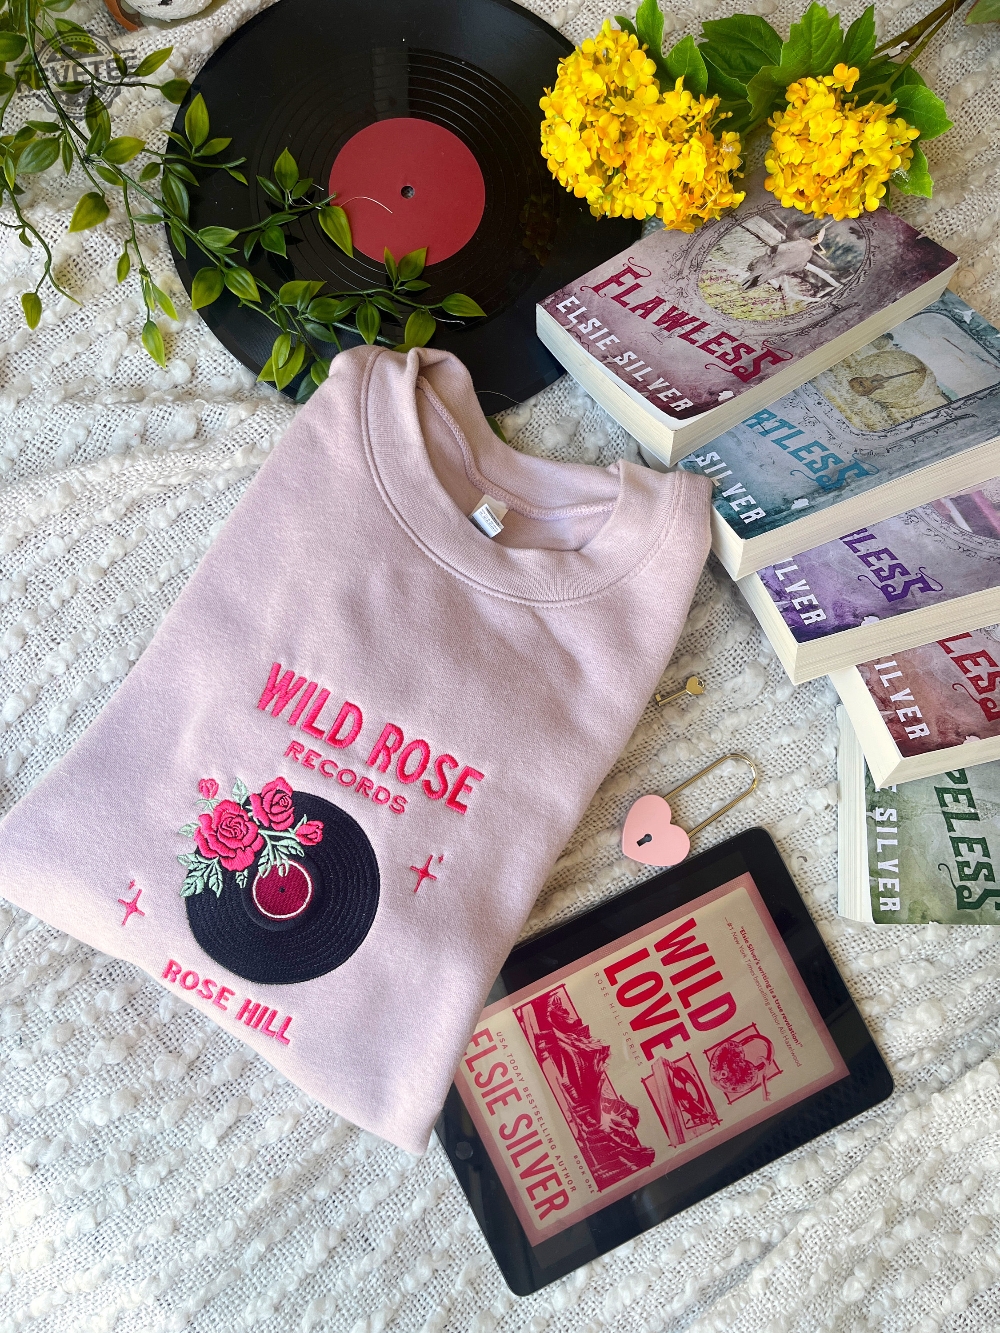 Wild Love Merch Wild Rose Records Elsie Silver Merch Ford Grant Embroidered Book Sweatshirt Bookish Merch